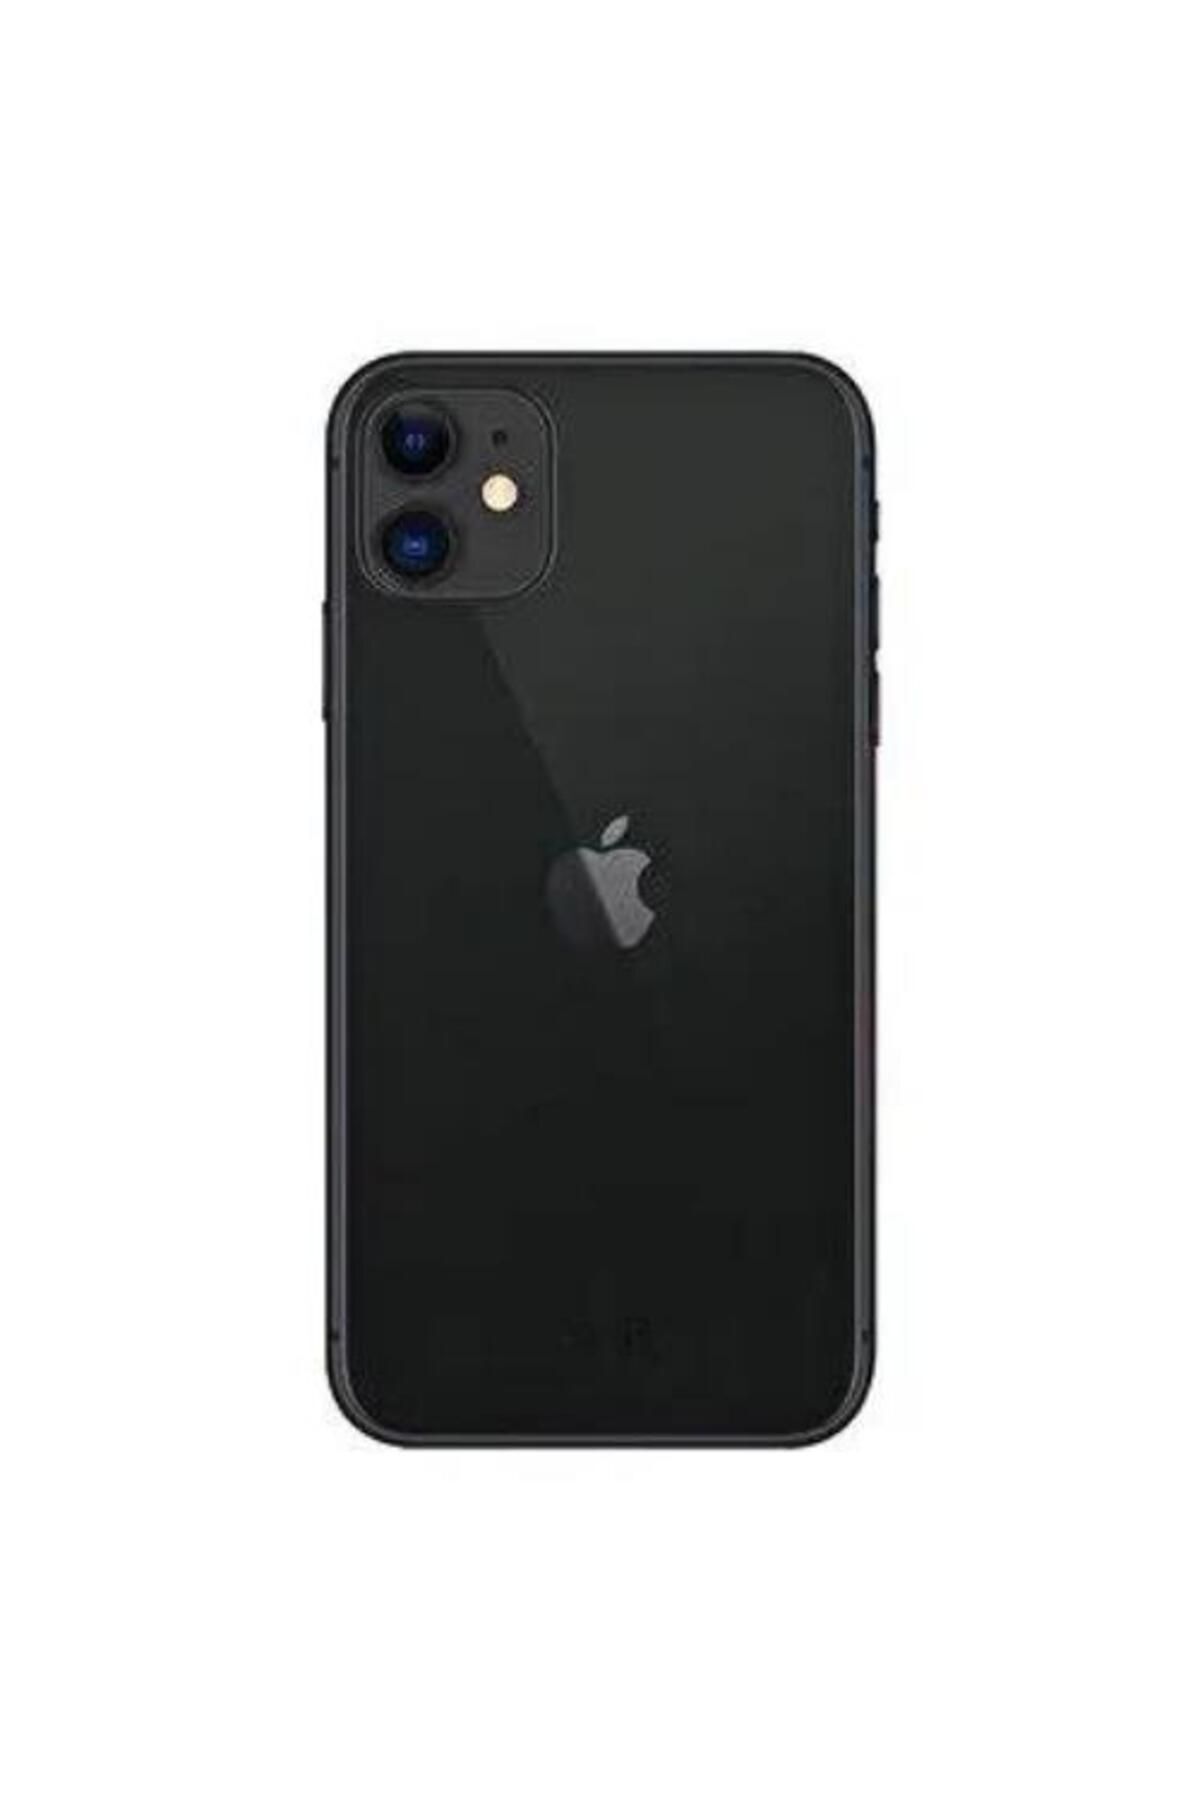 Apple Iphone 11 Black 64gb Yenilenmiş C Kalite (12 AY GARANTİLİ)